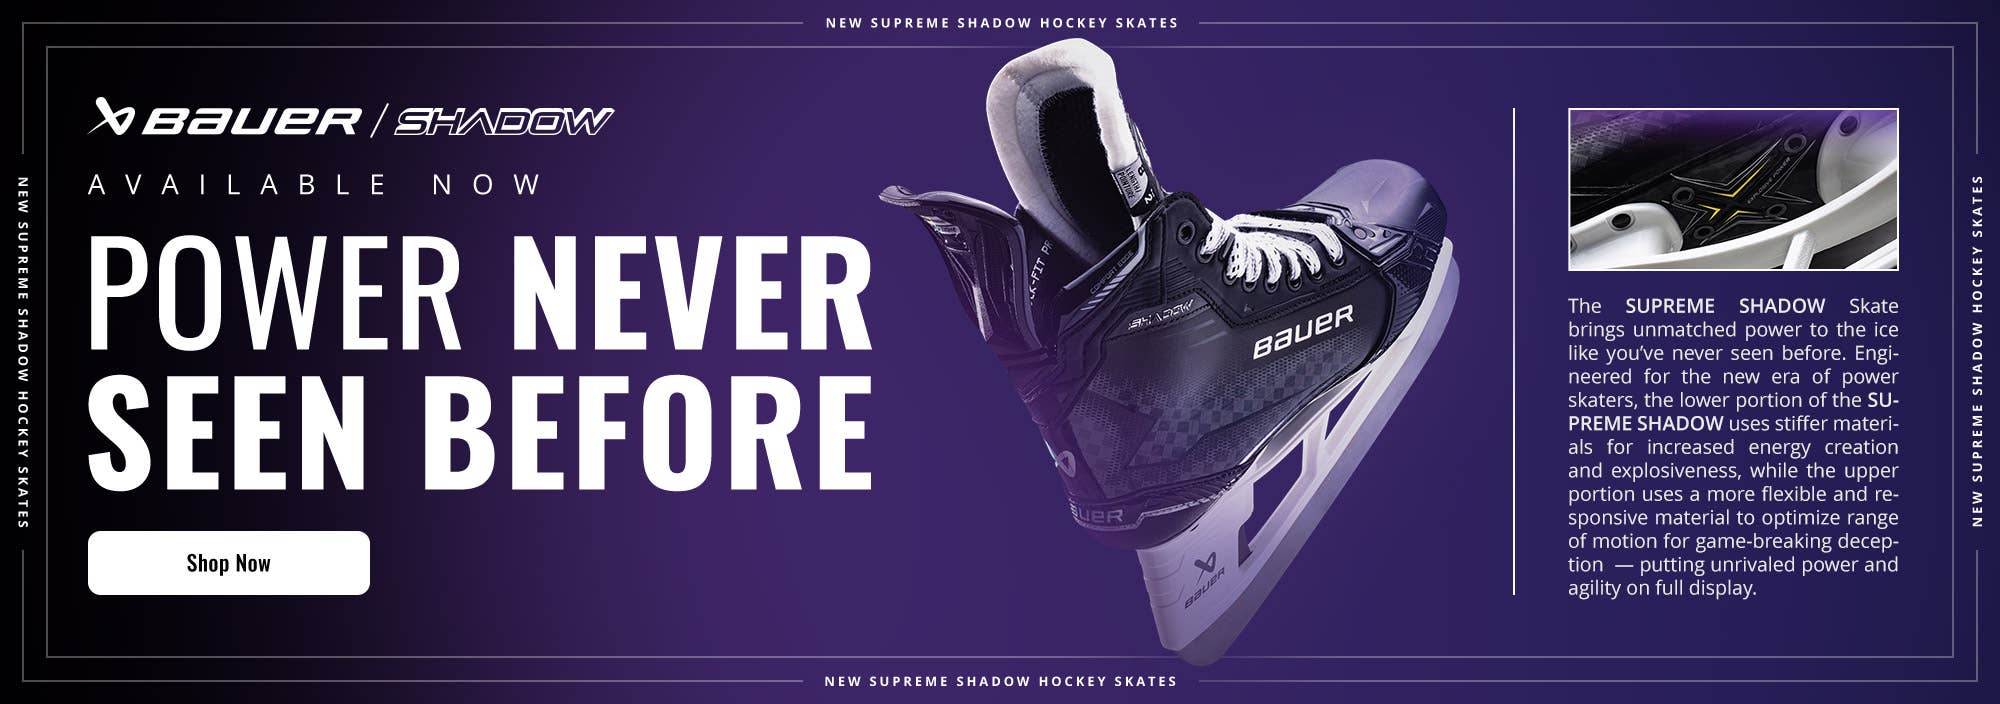 Bauer Supreme Shadow Hockey Skates